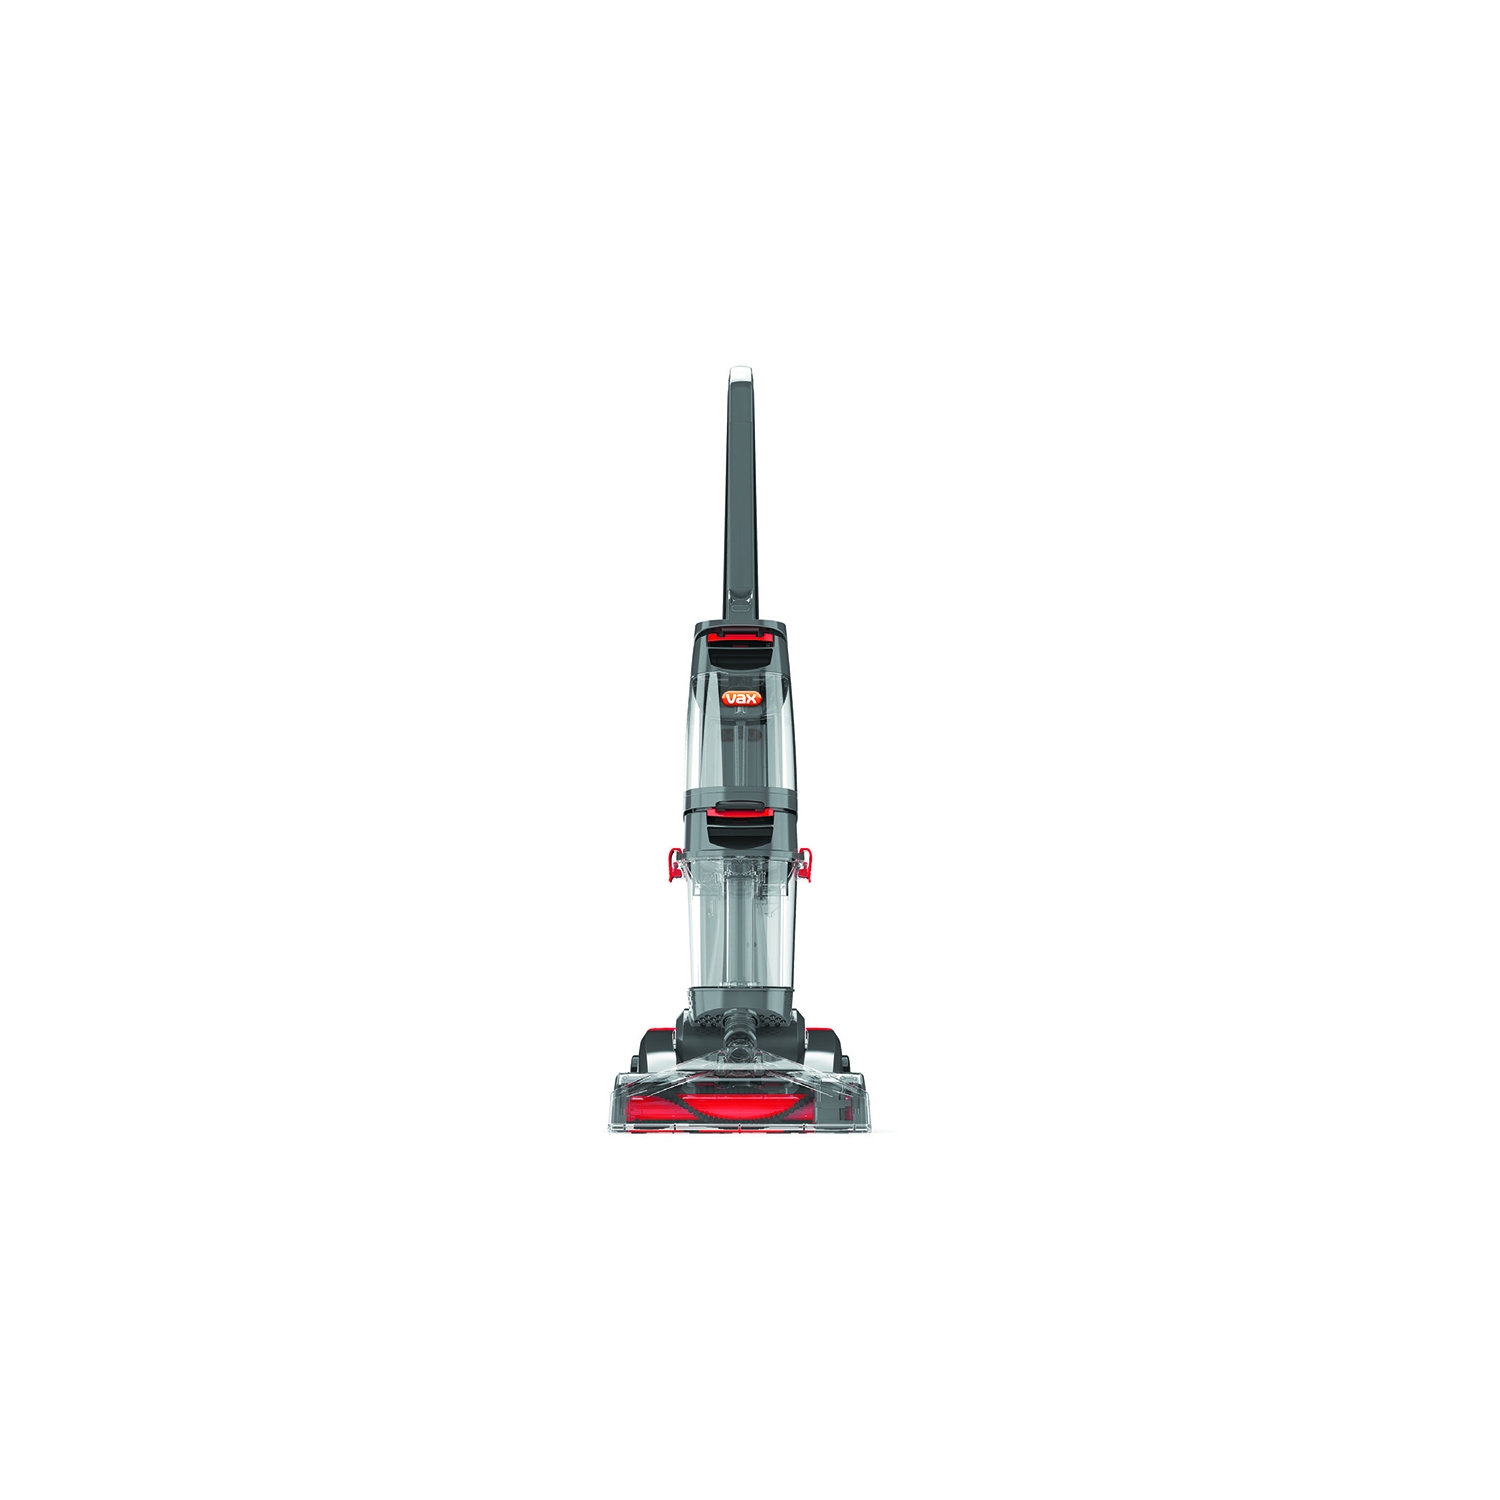 Vax W85DPE Upright Carpet Cleaner - 4